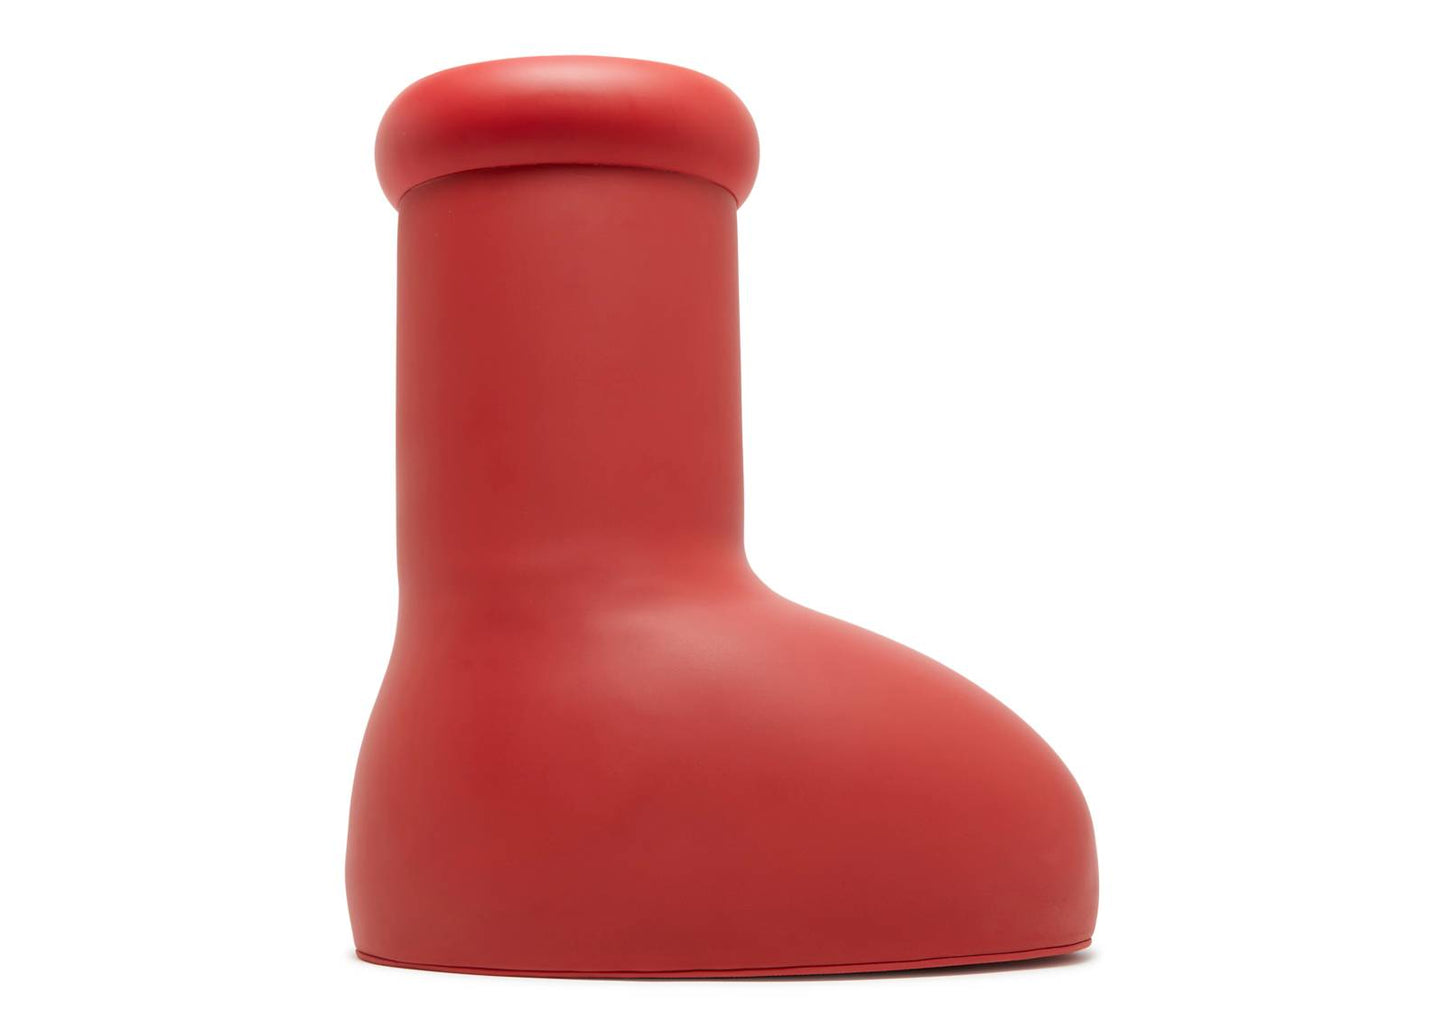 MSCHF Big Red Boot